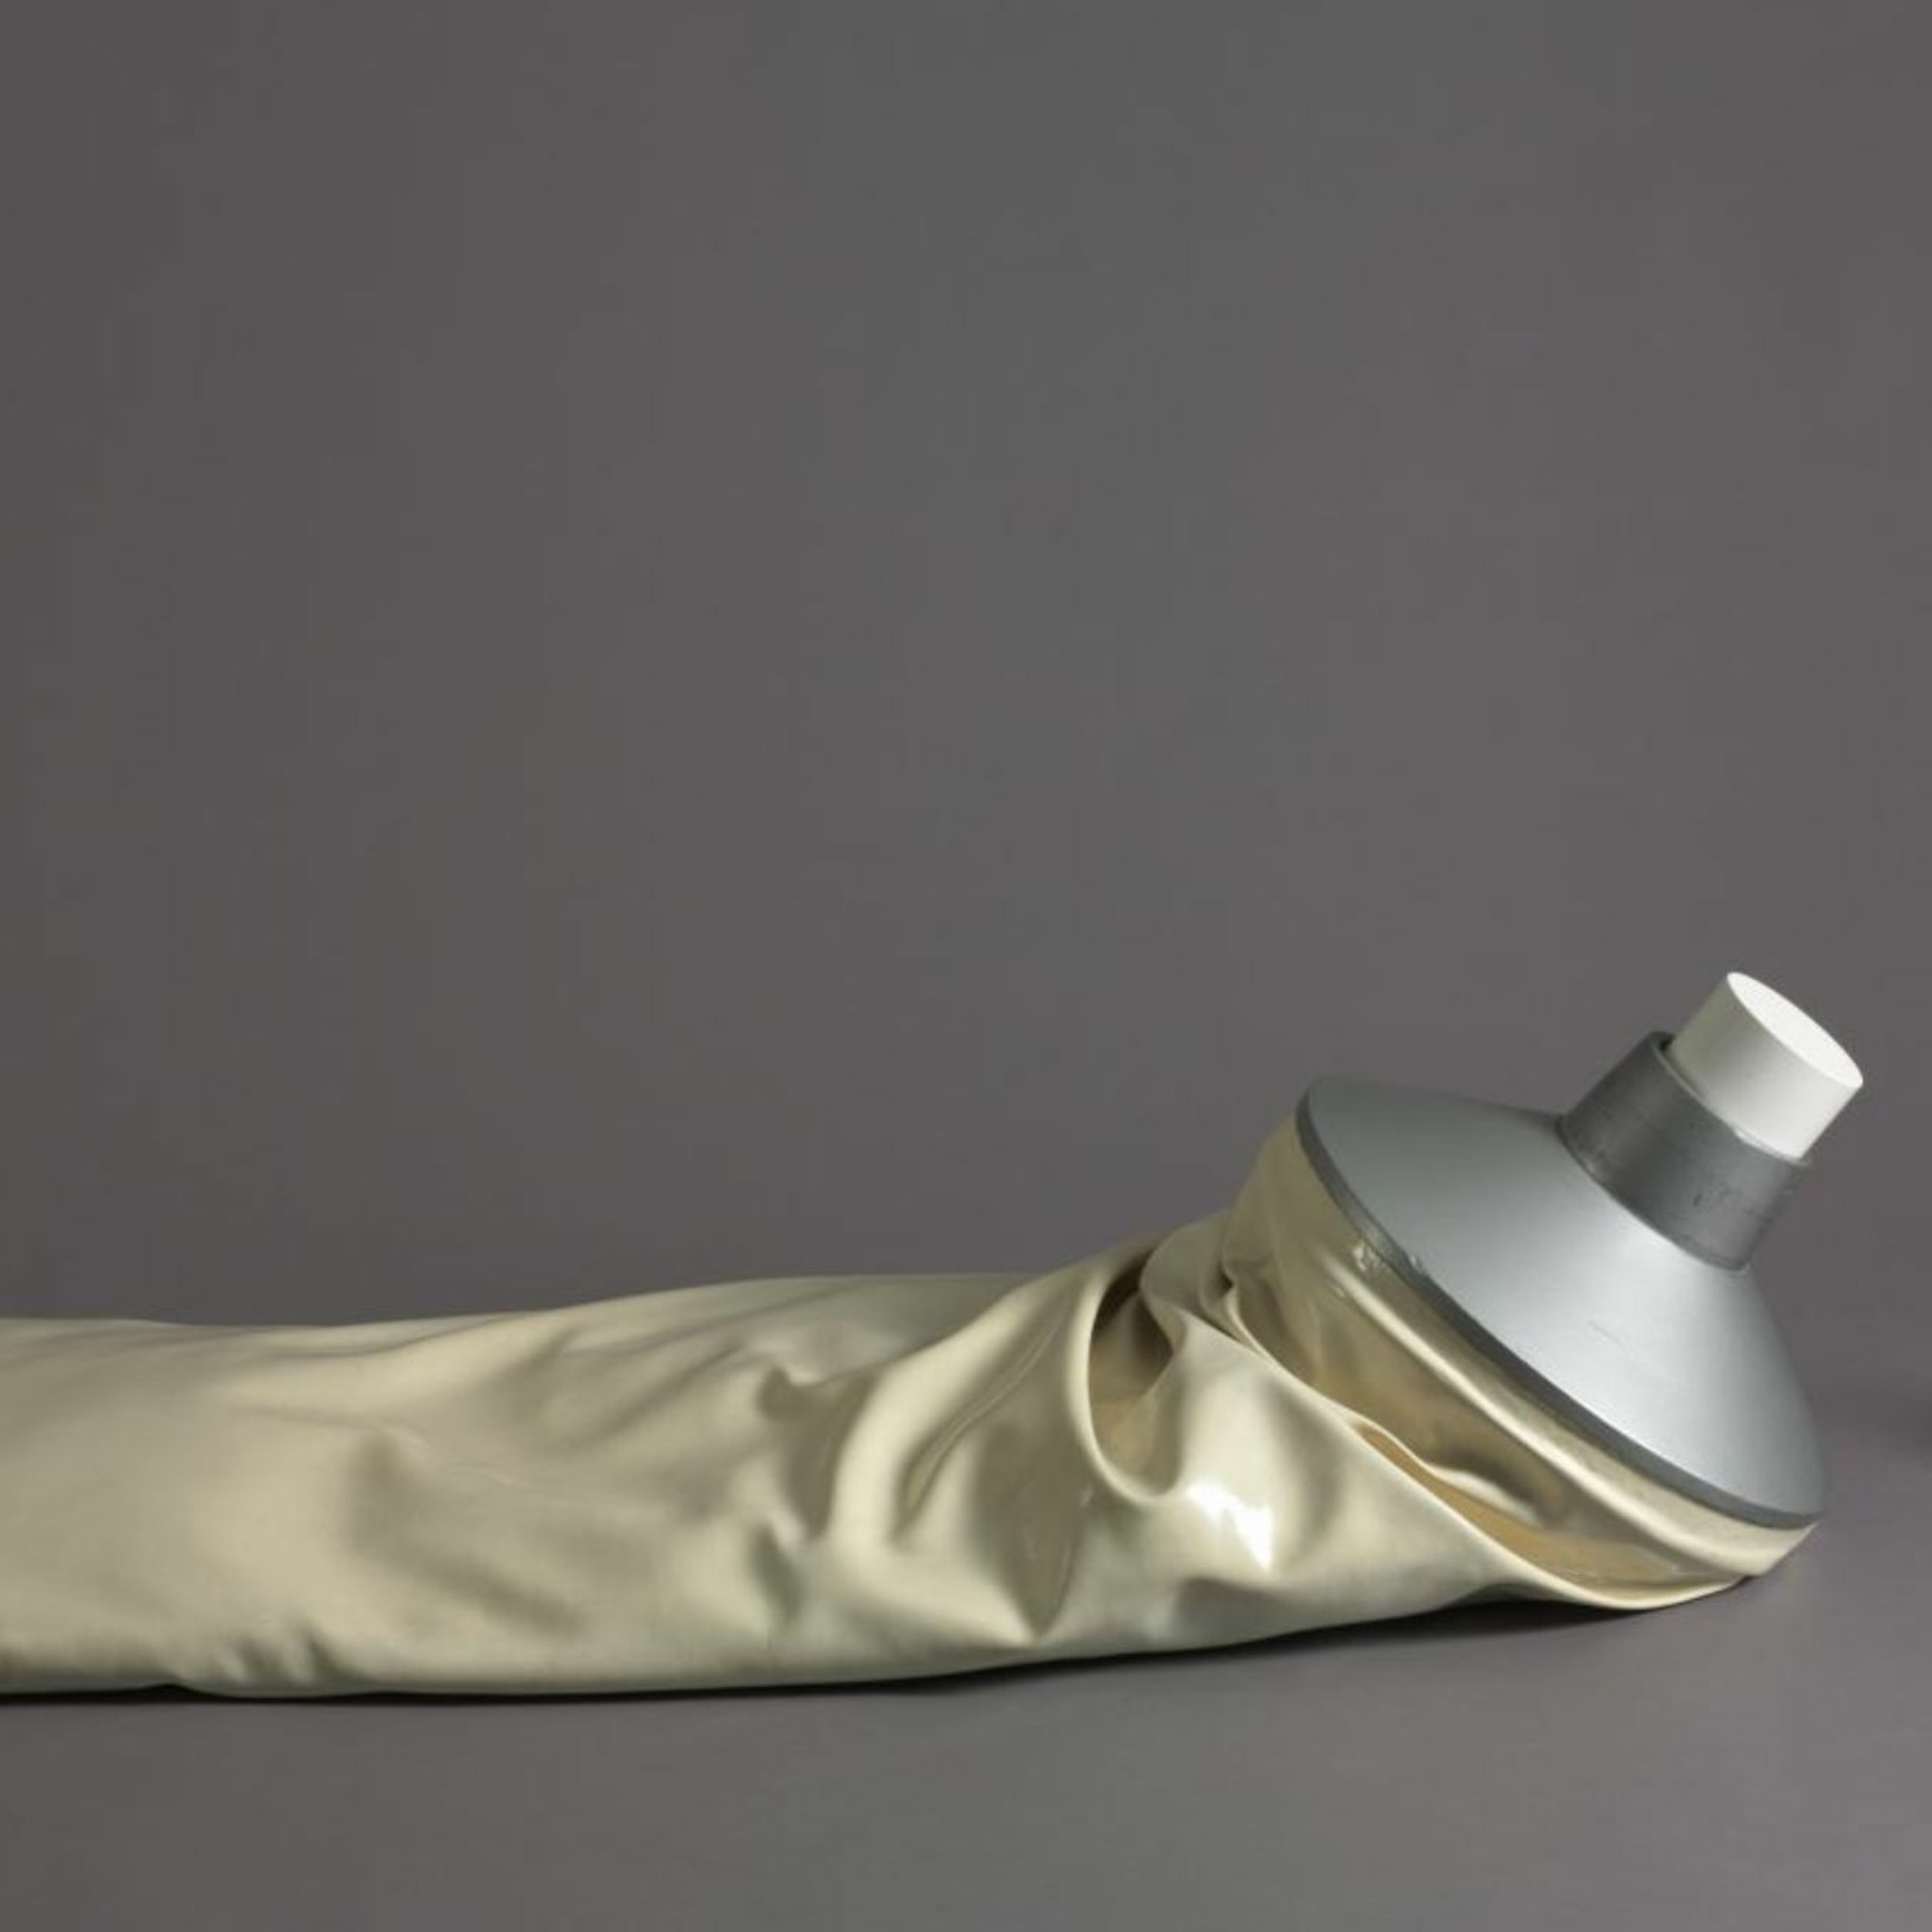 Ep. 49 - Claes Oldenburg's "Giant Toothpaste Tube" (1964)